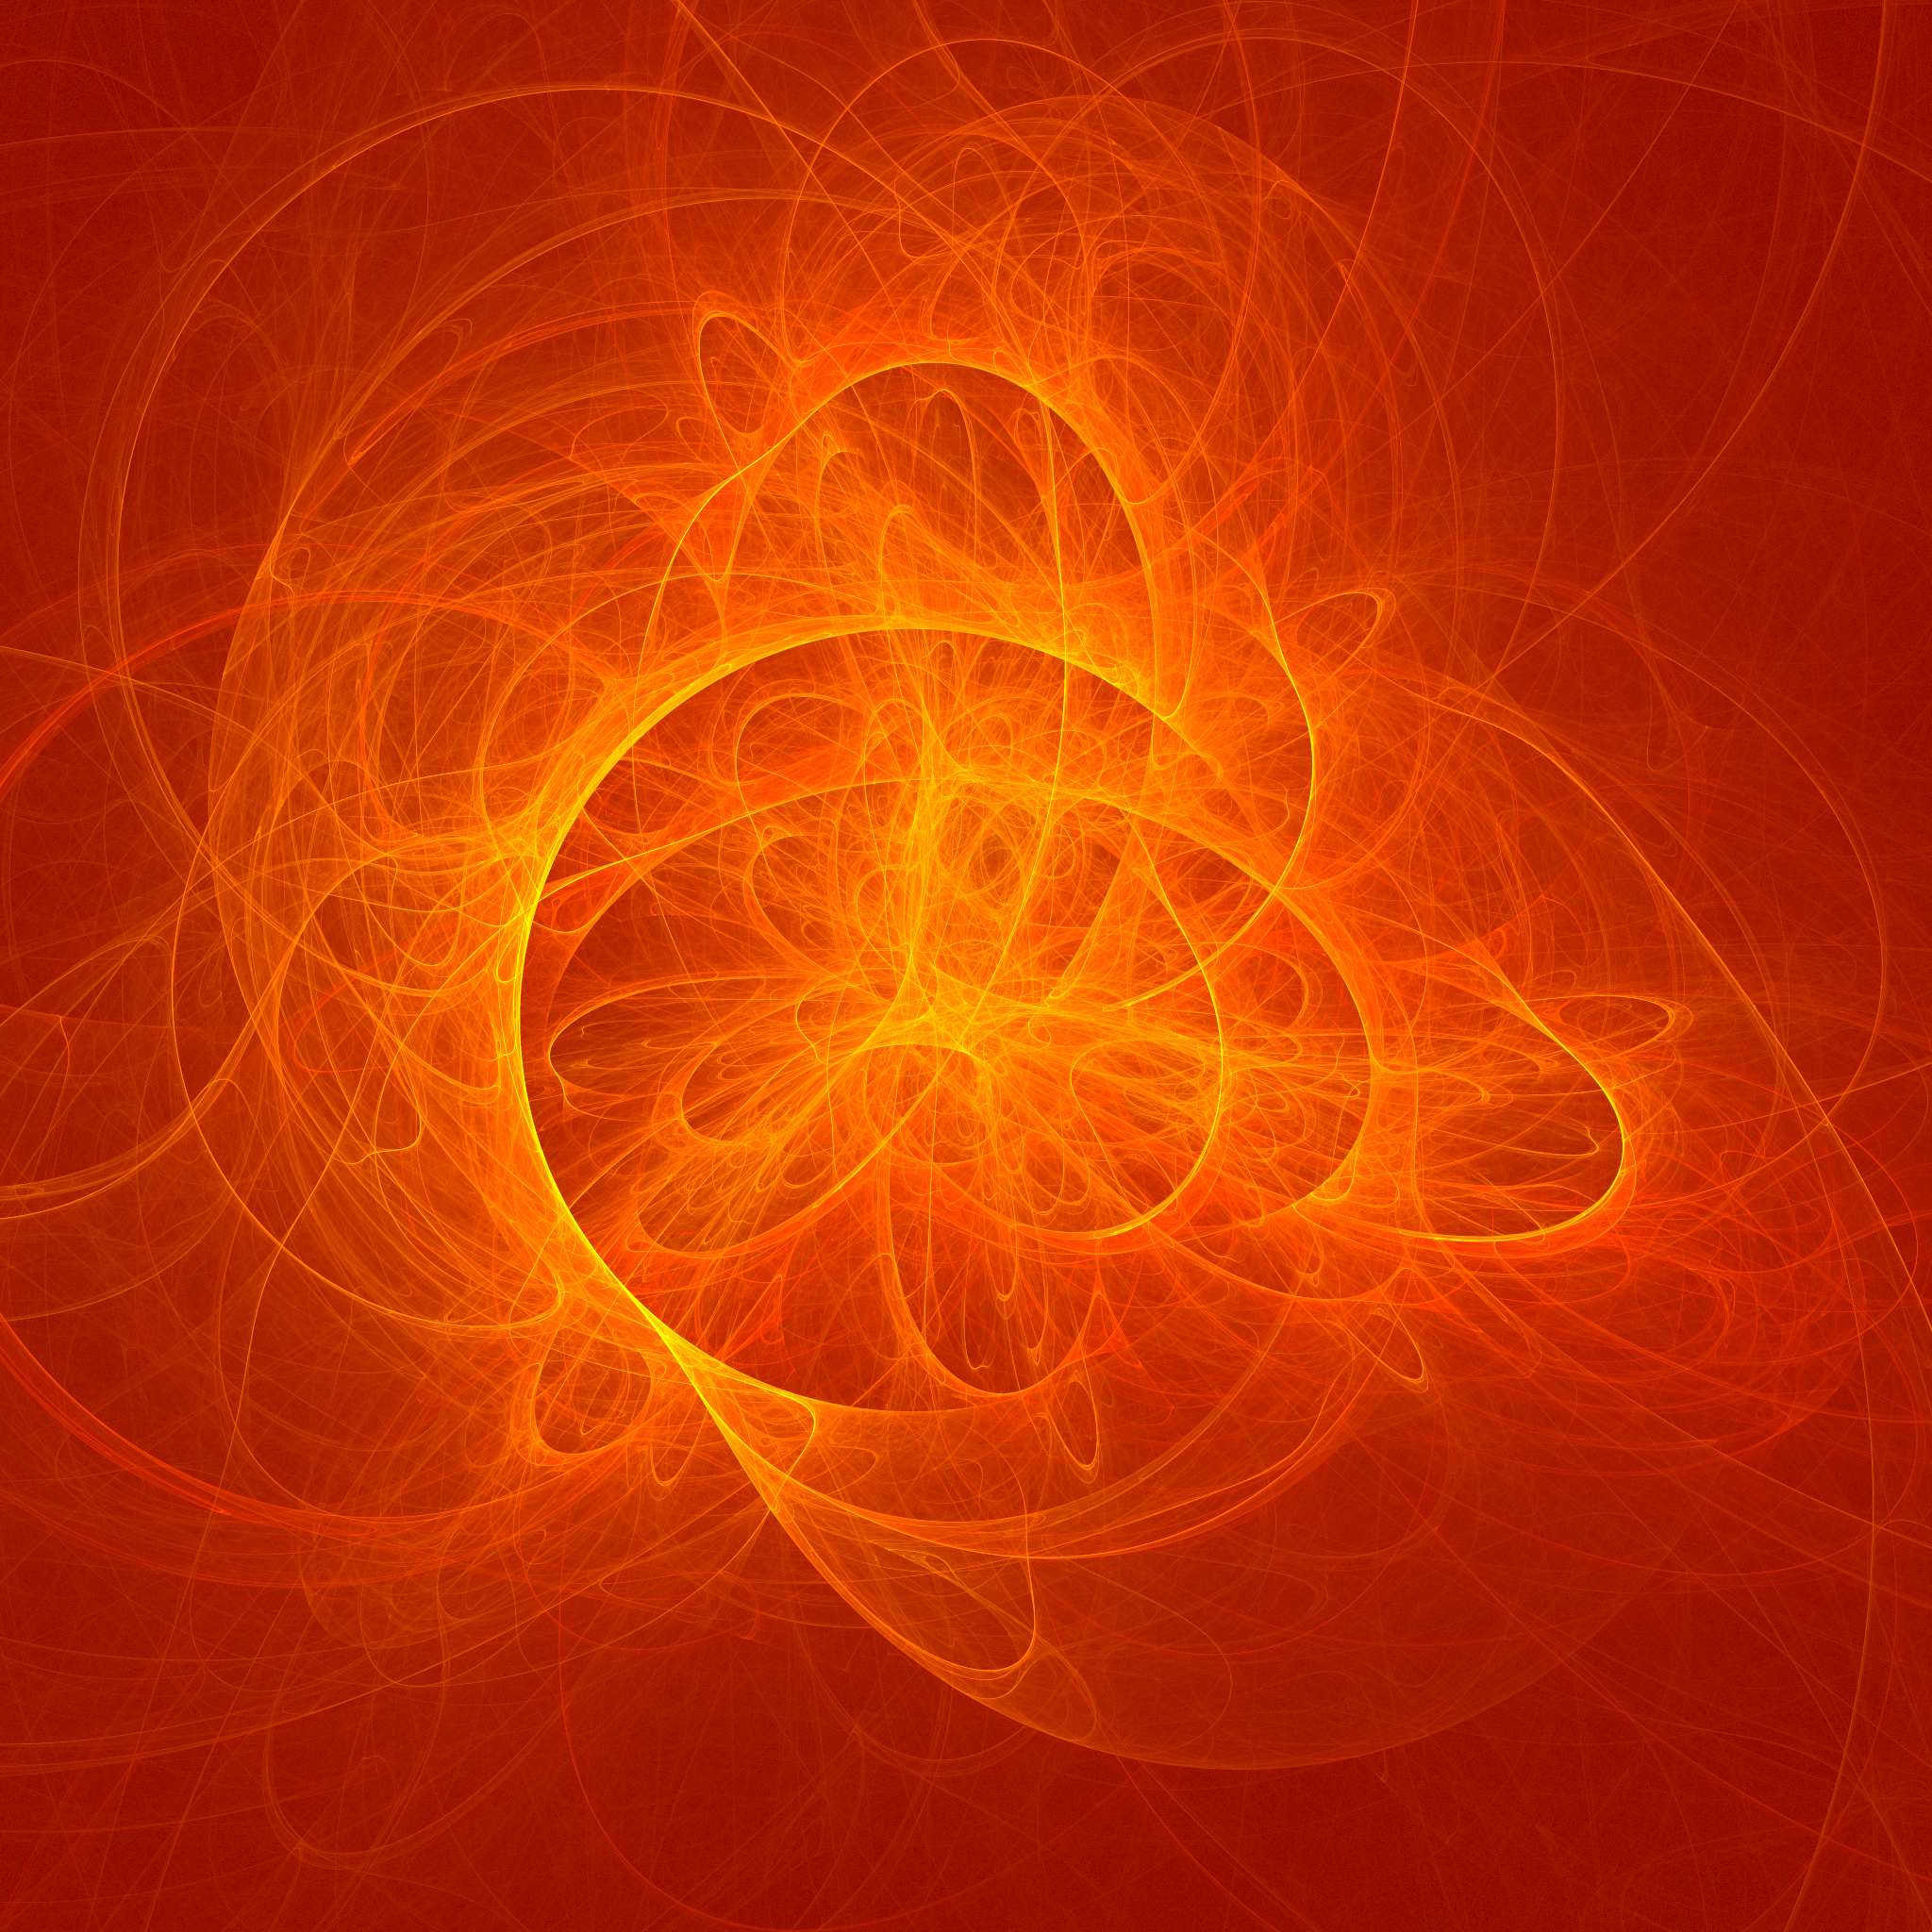 Sun Flames by CG-Kuba - Image Abyss